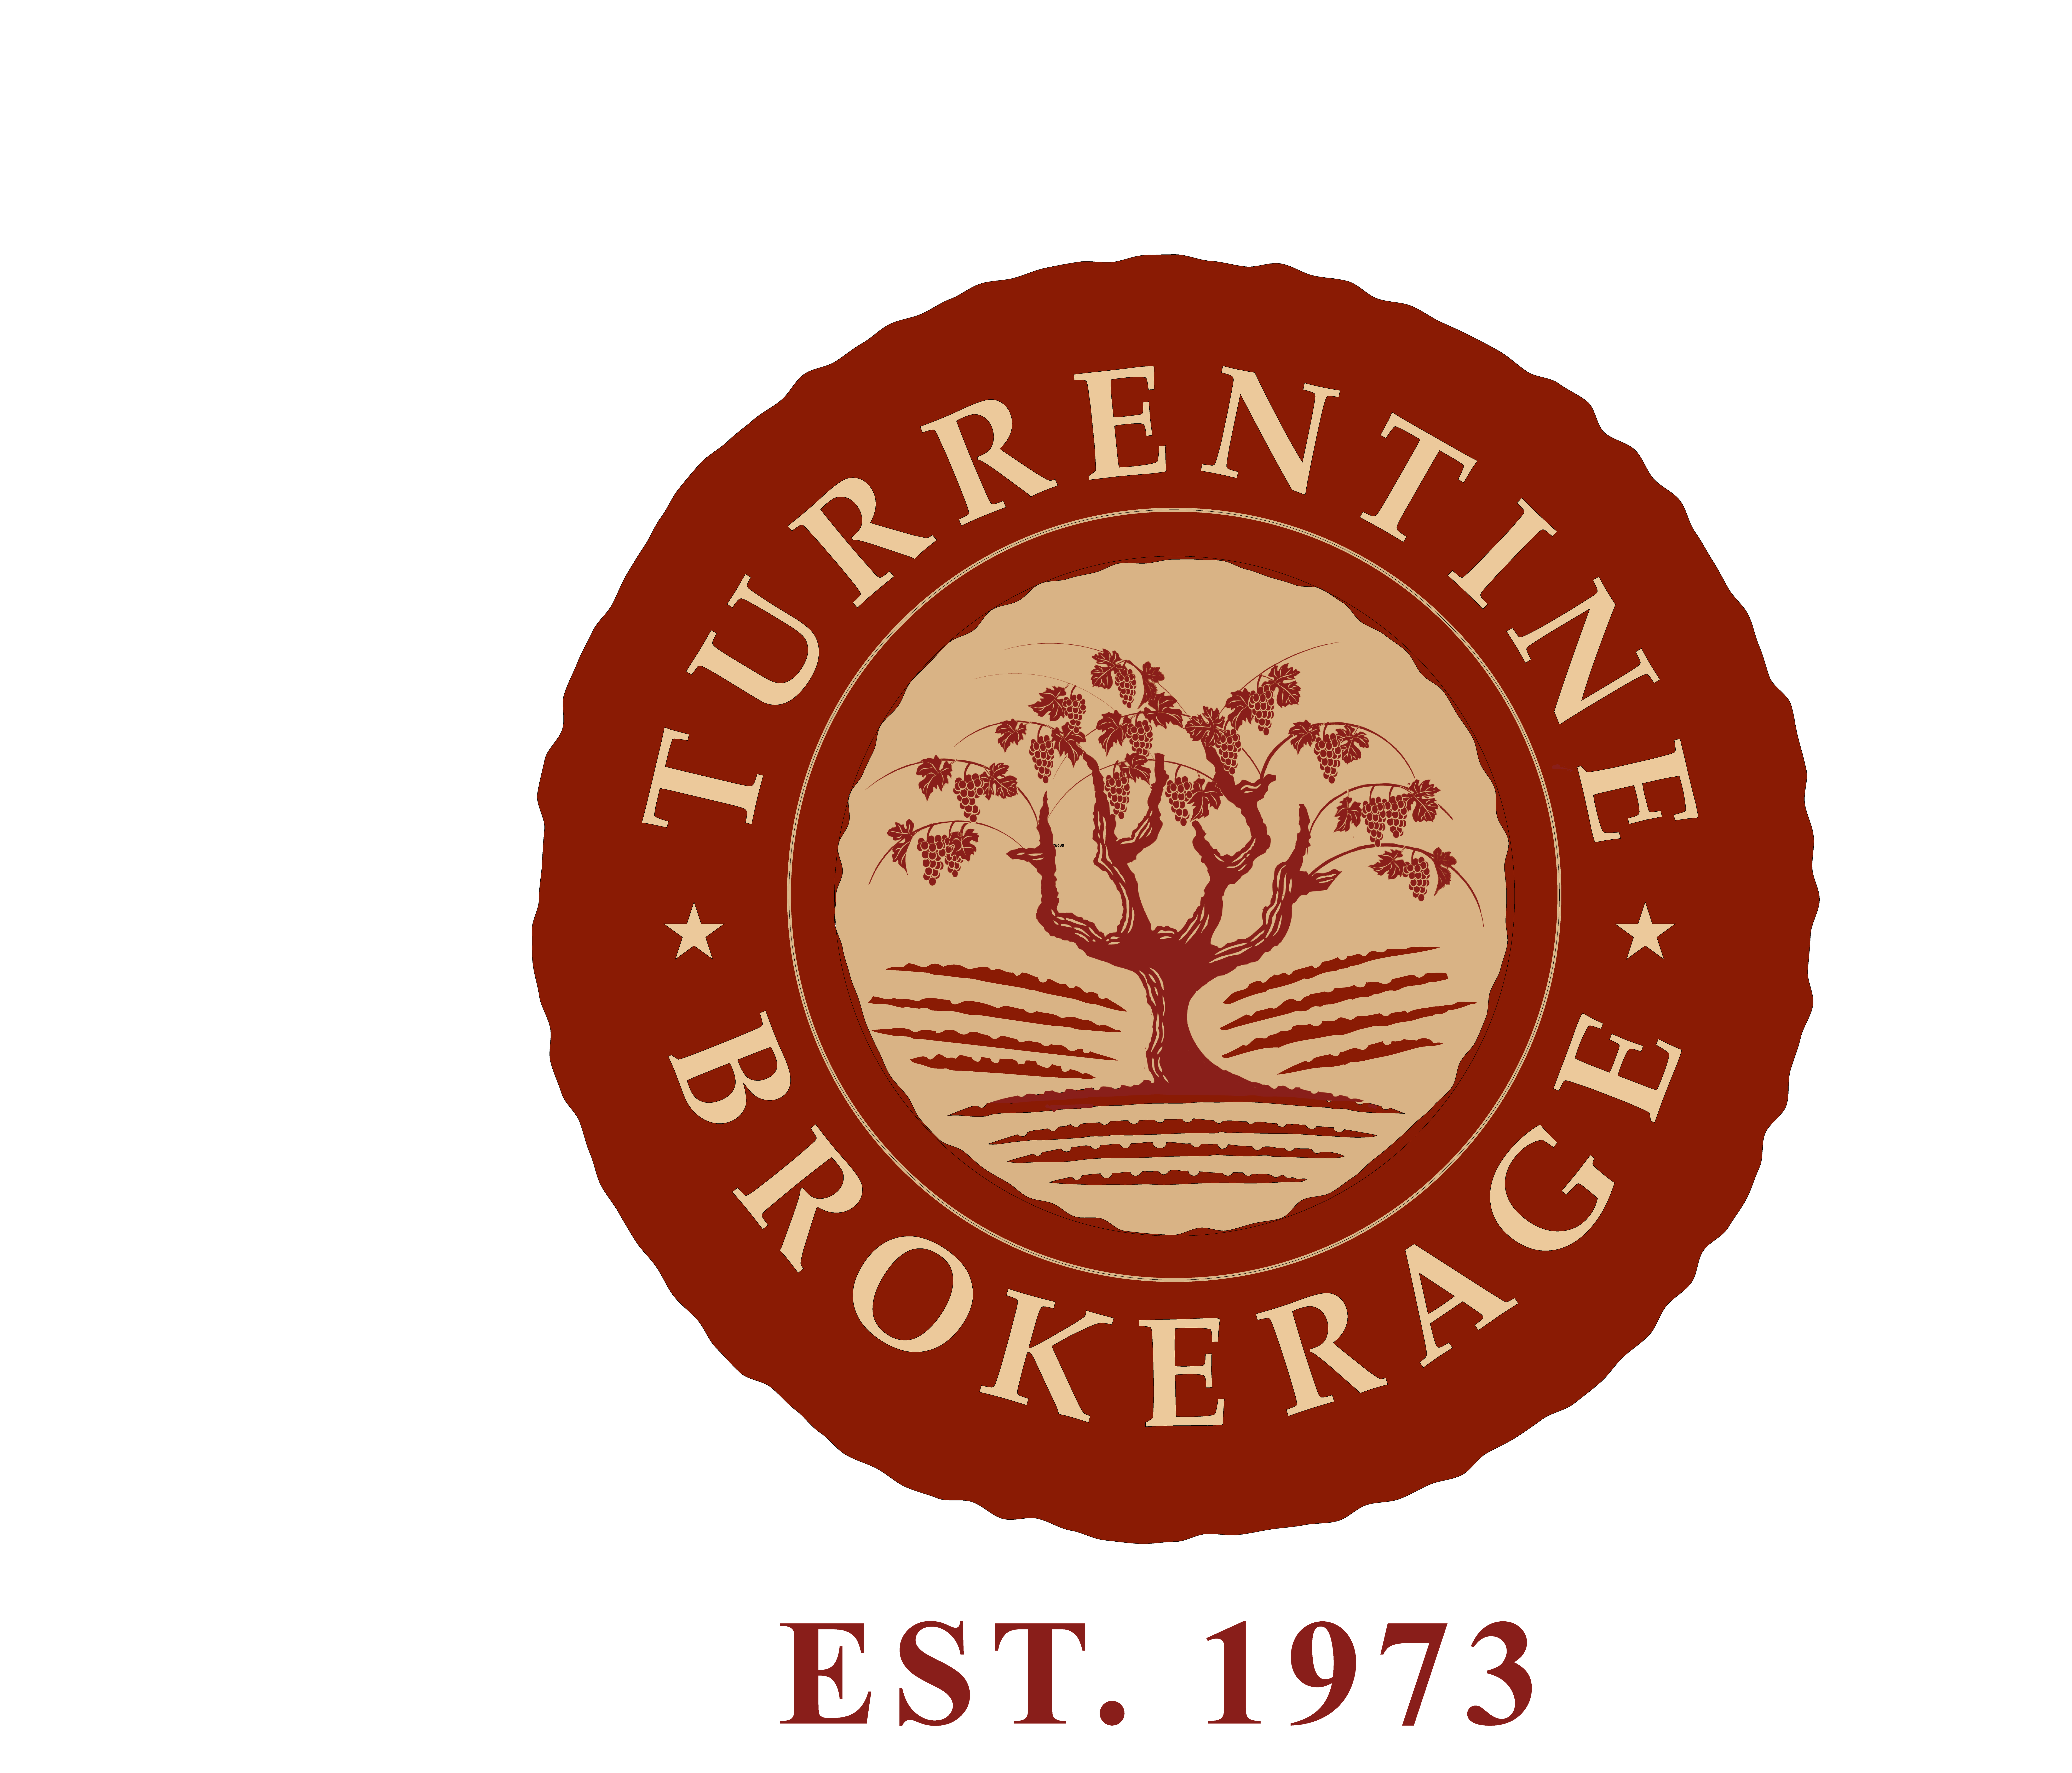 Turrentine Brokerage logo